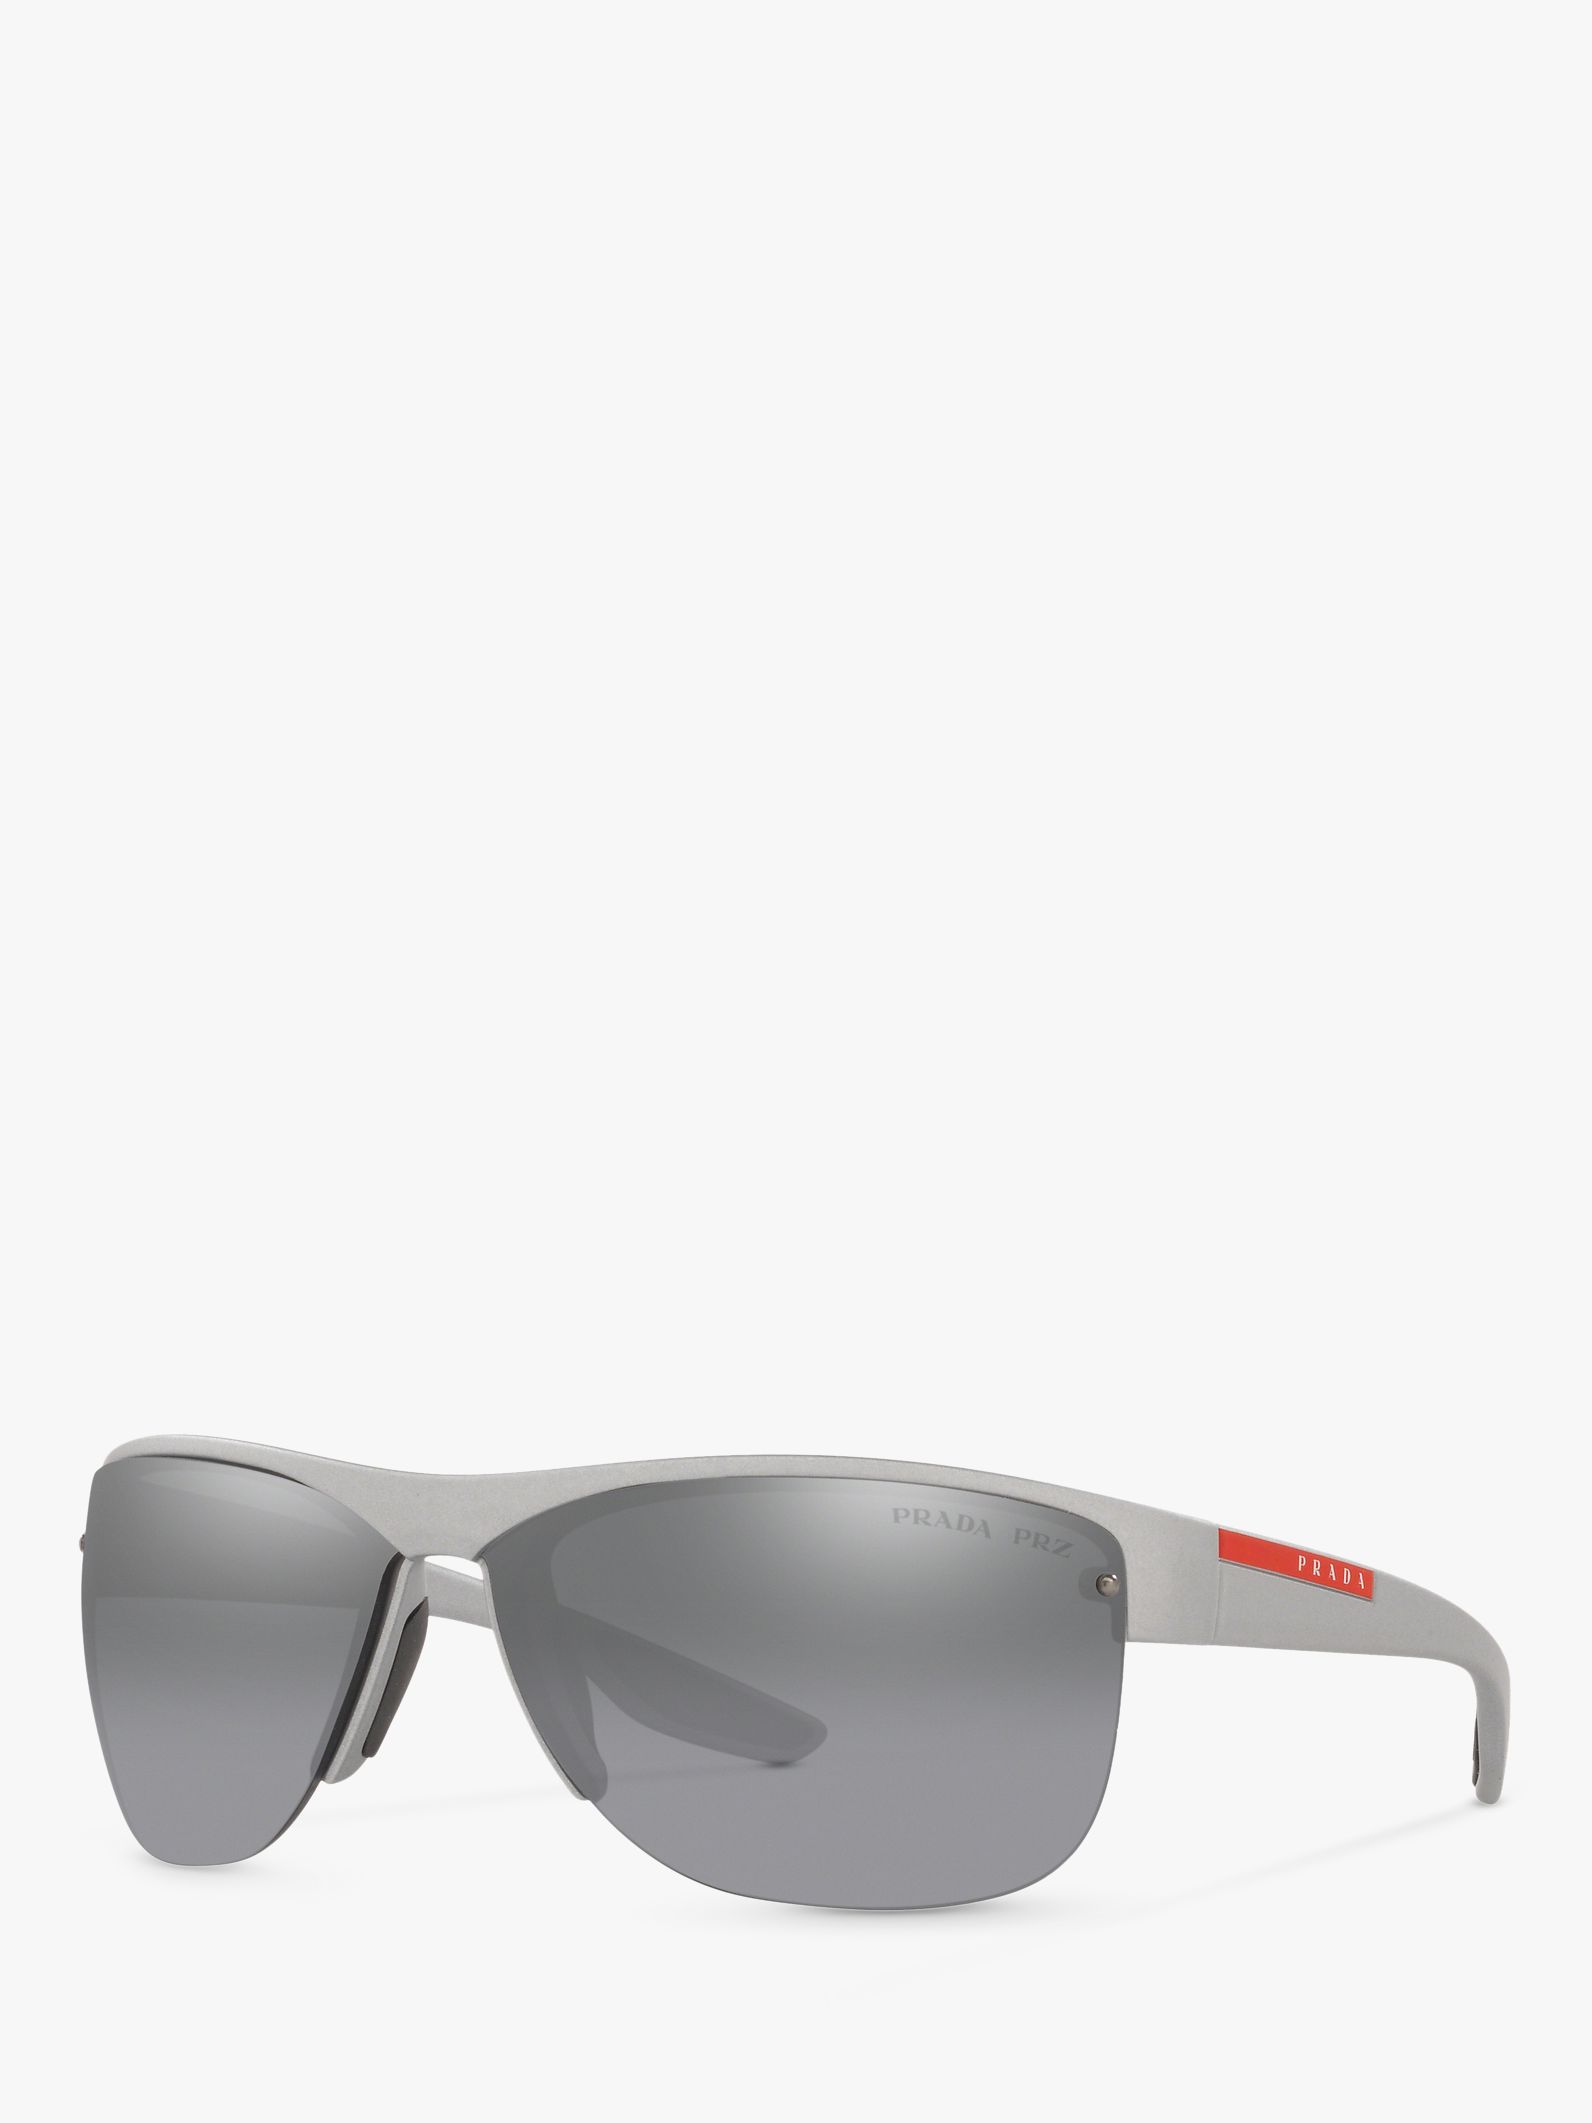 Prada Linea Rossa PS 17US Men's Active Sunglasses, Grey/Gunmetal